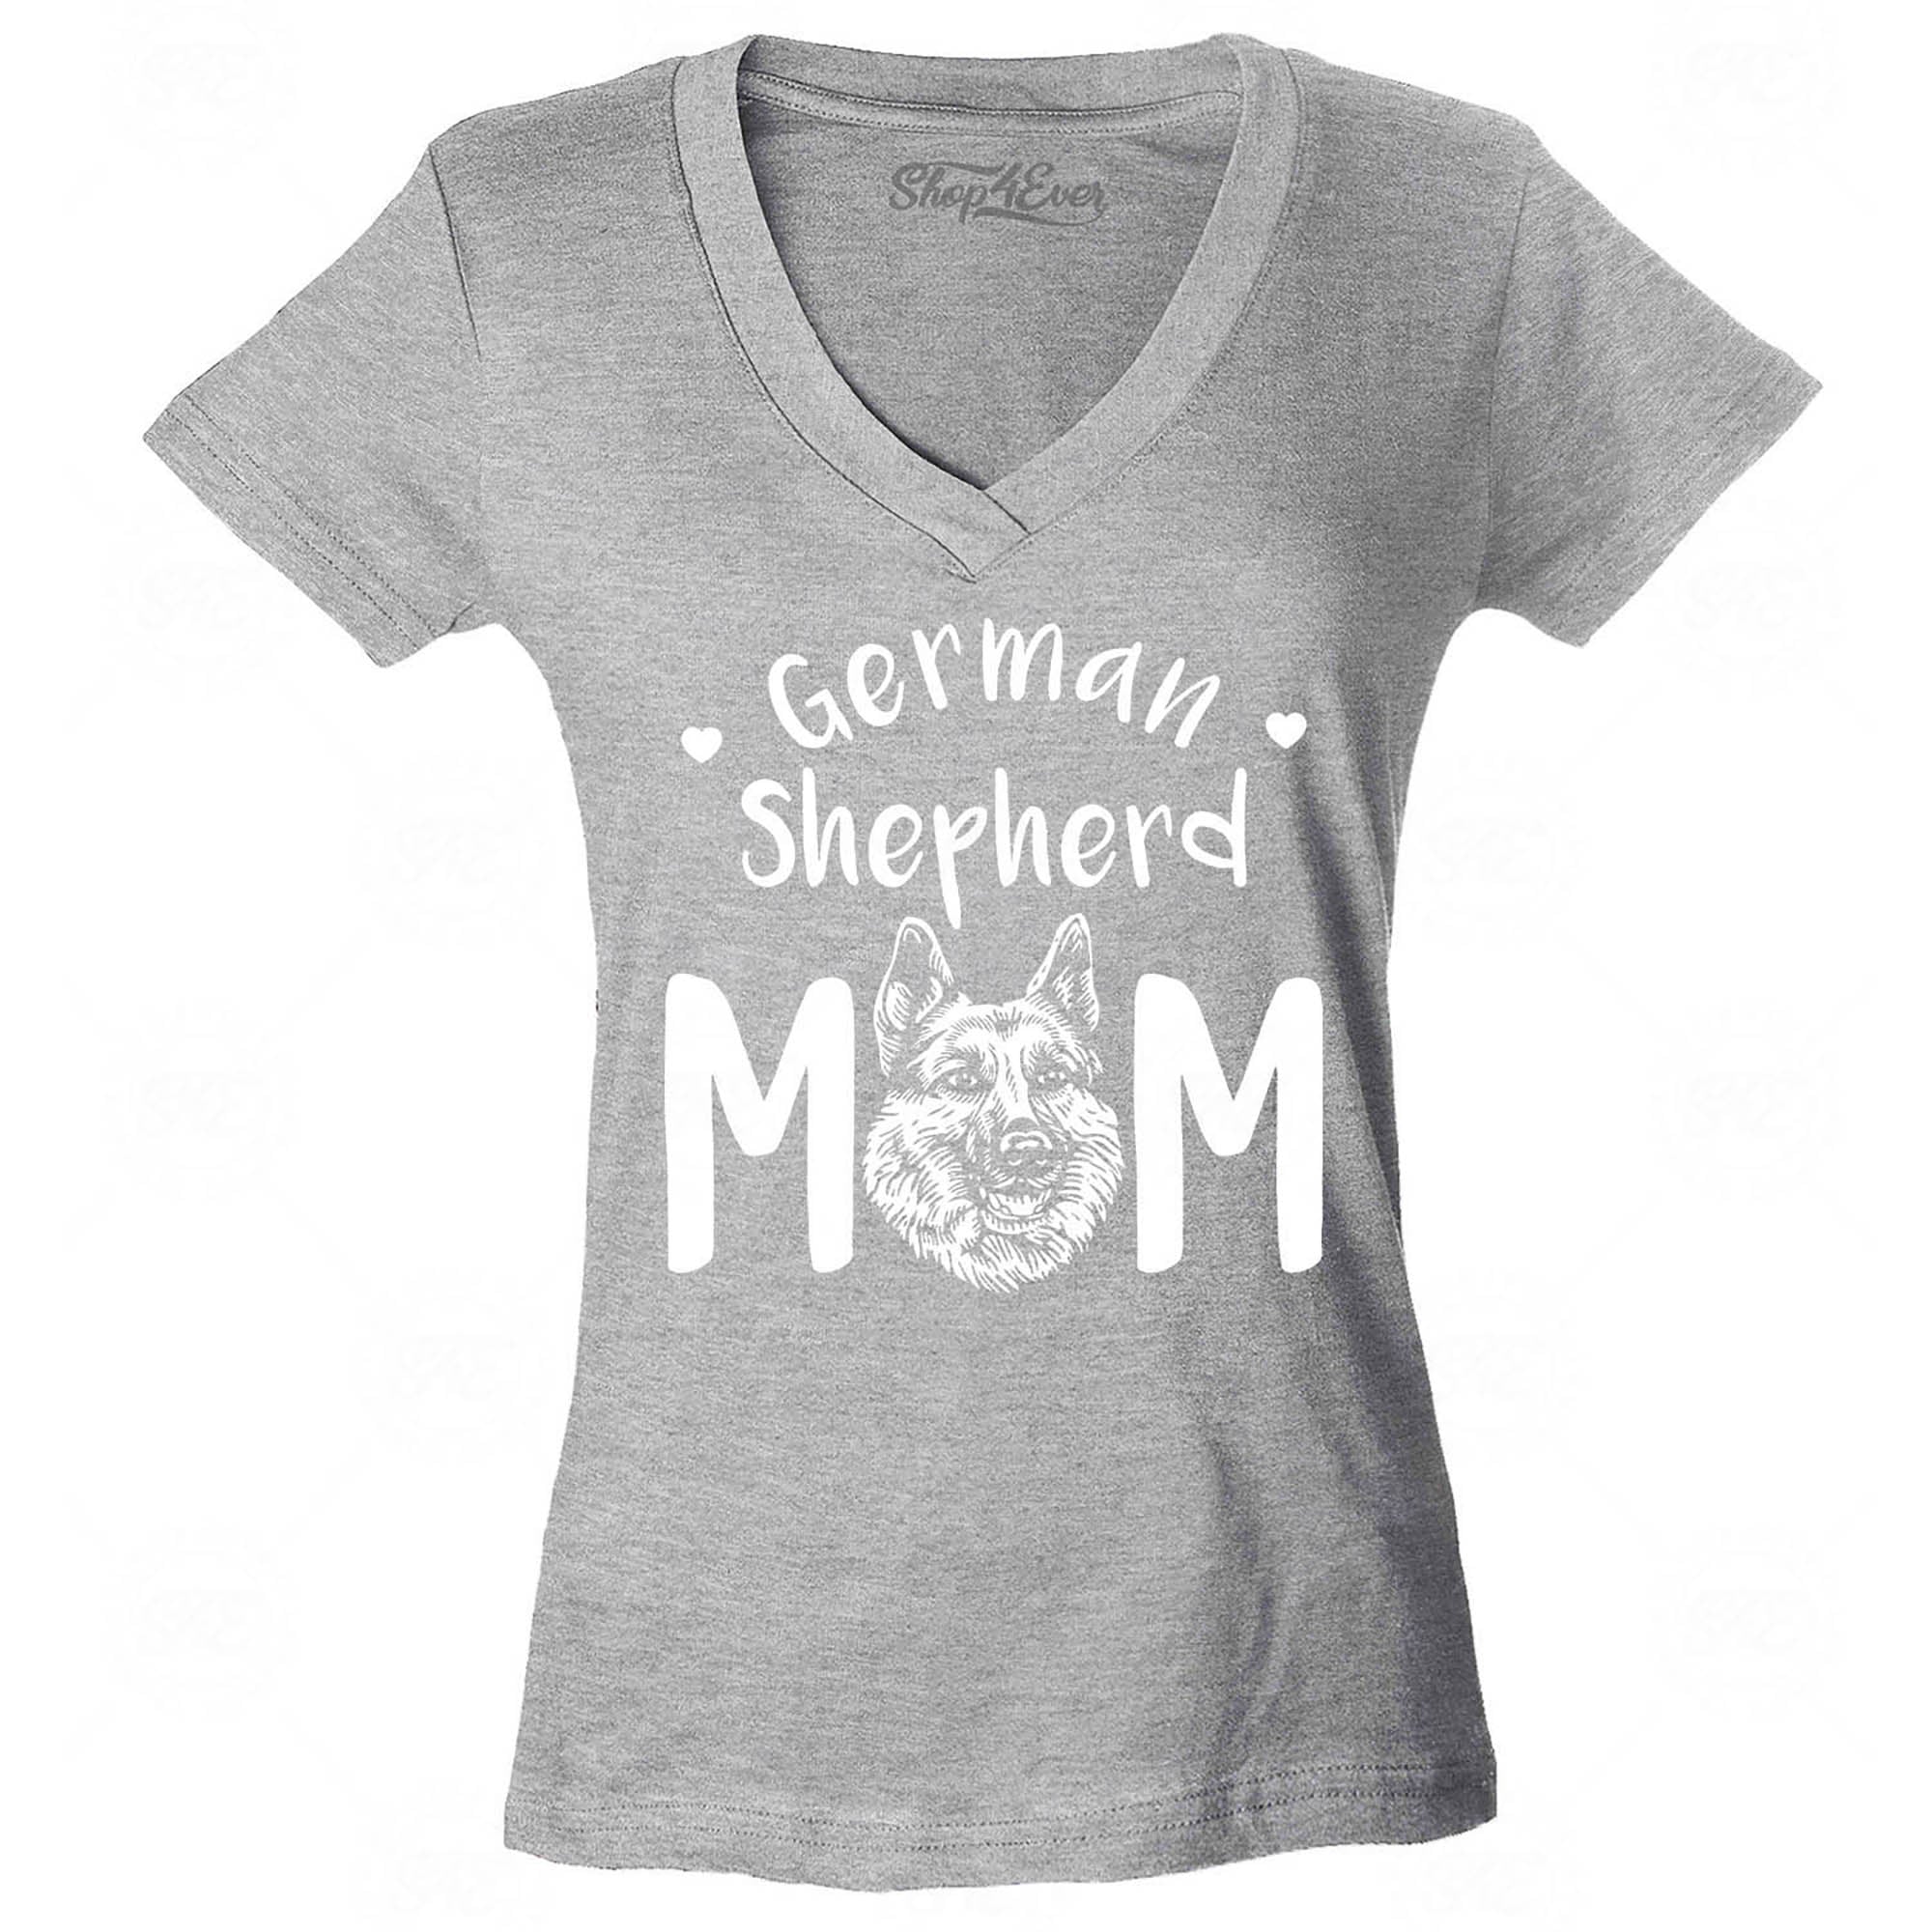 German Shepherd Mom Women's V-Neck T-Shirt Slim Fit